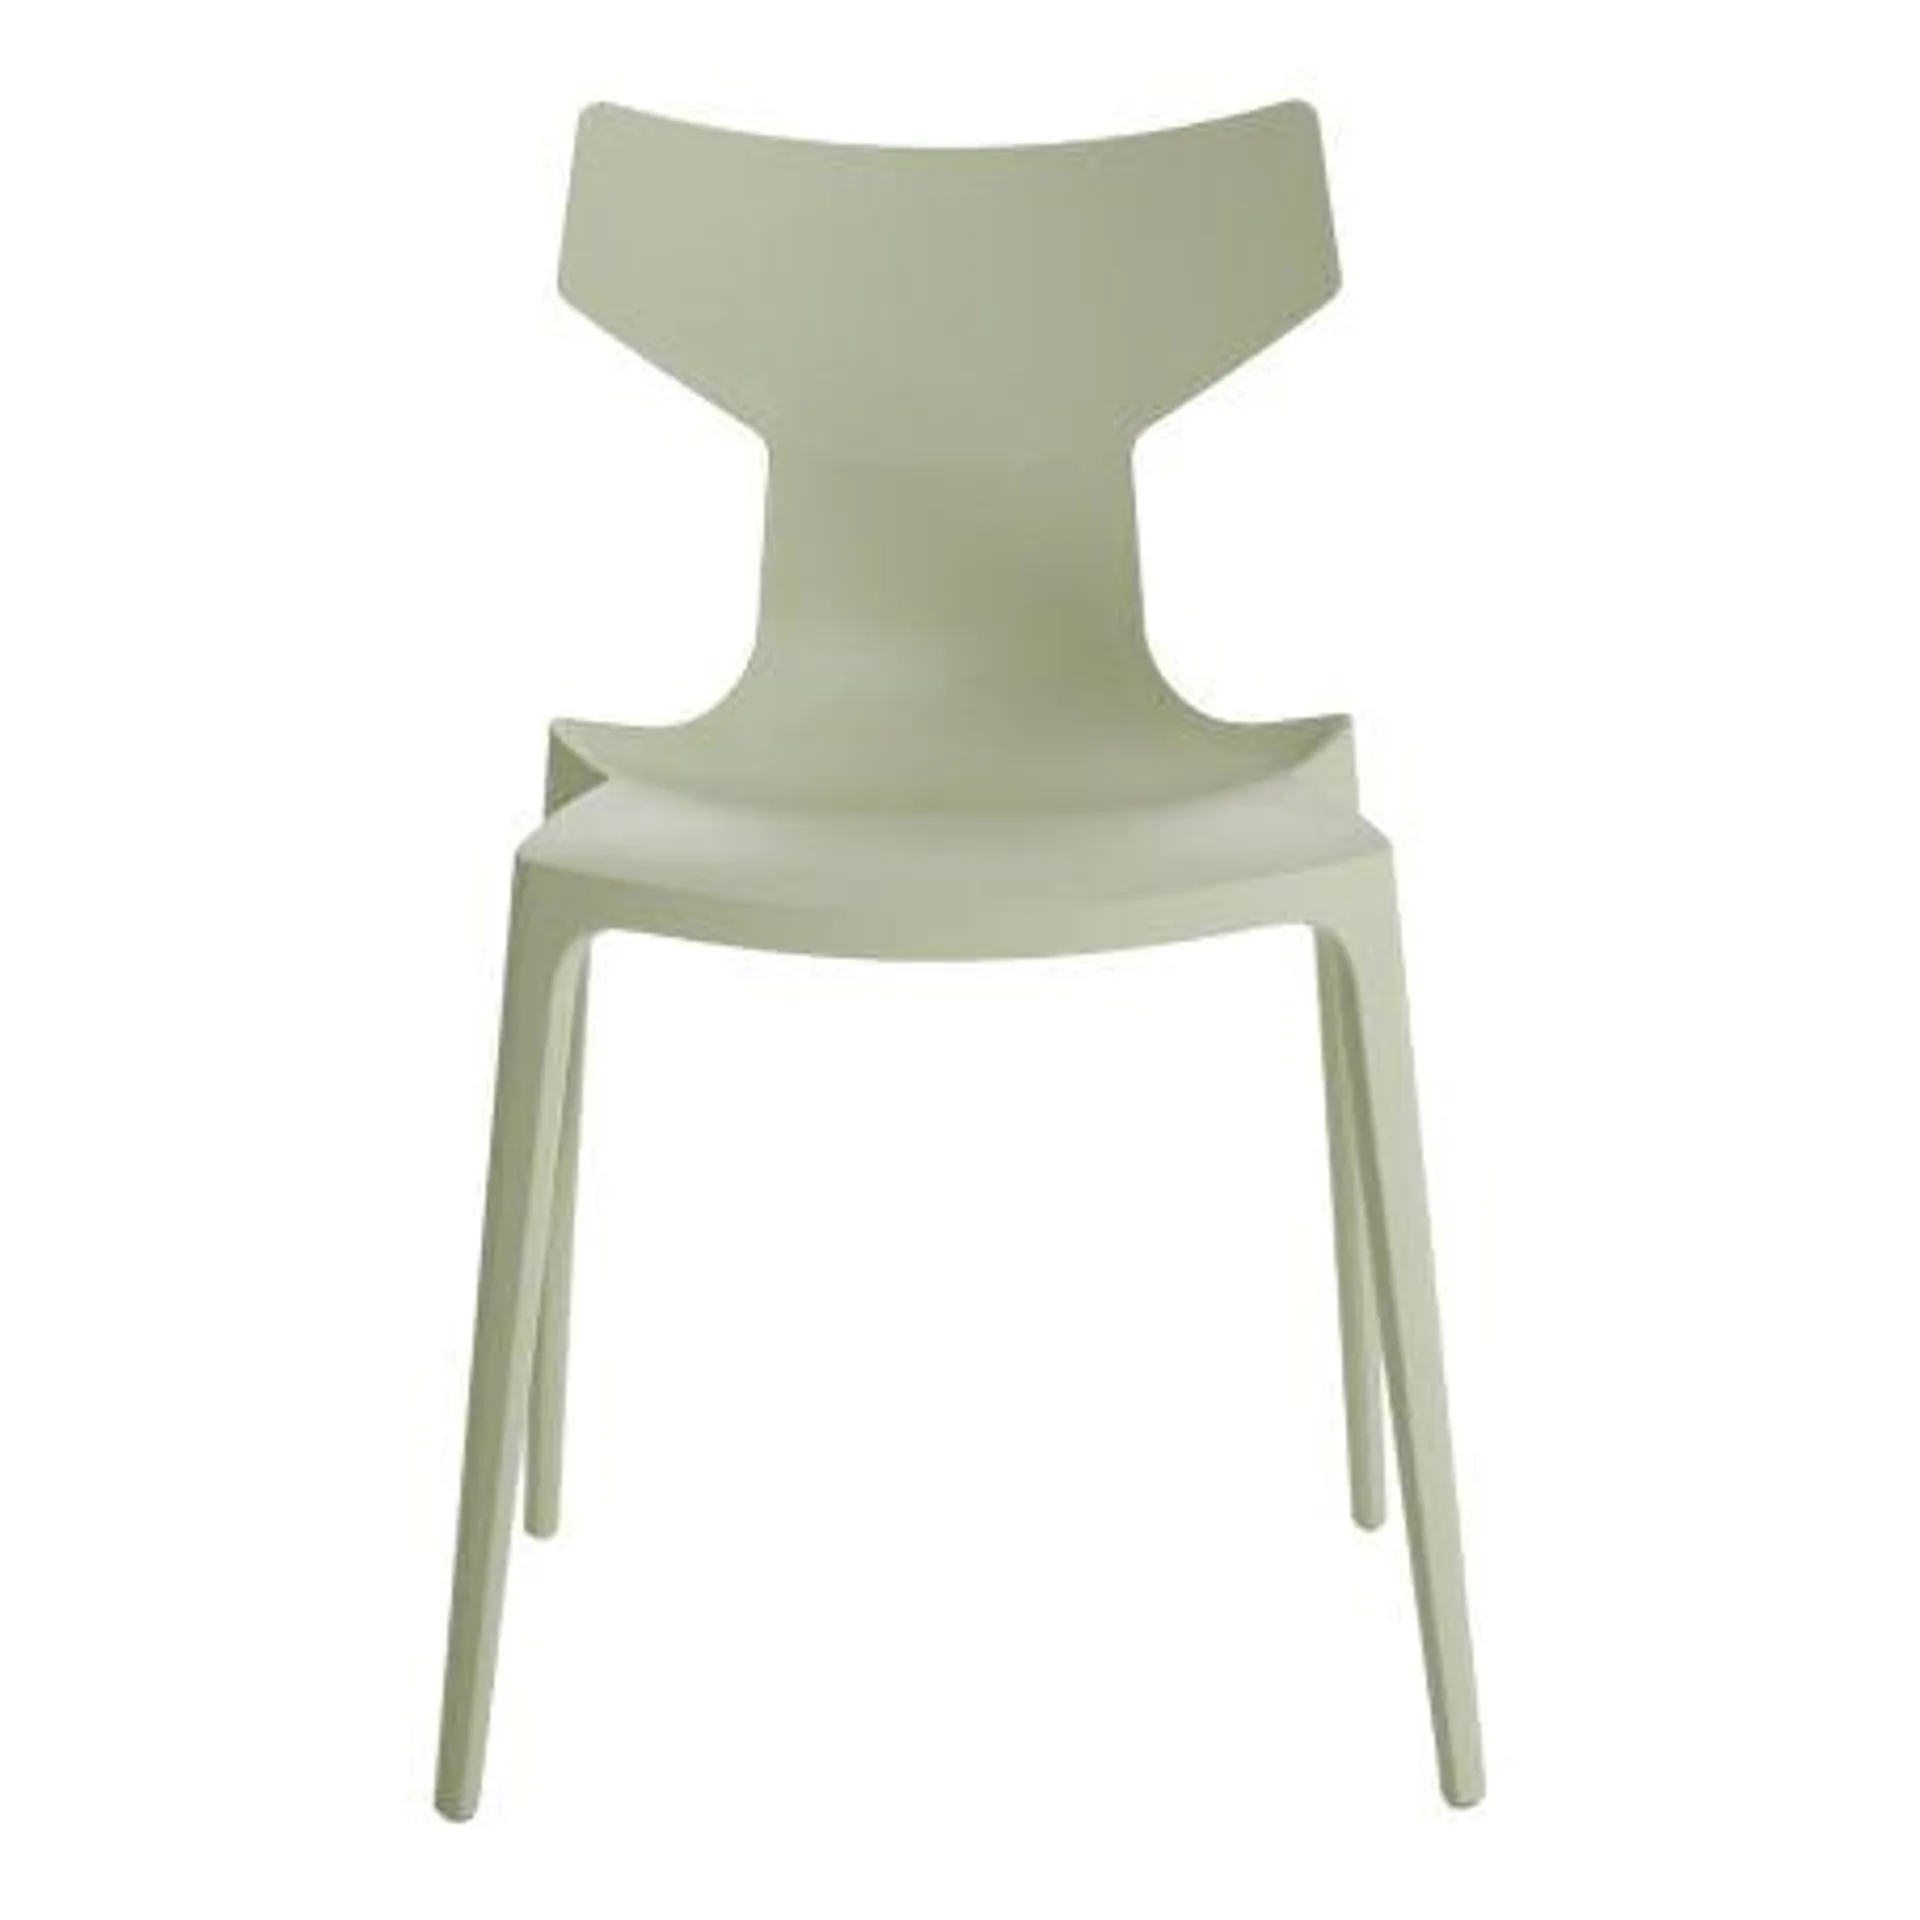 RE-Chair Green